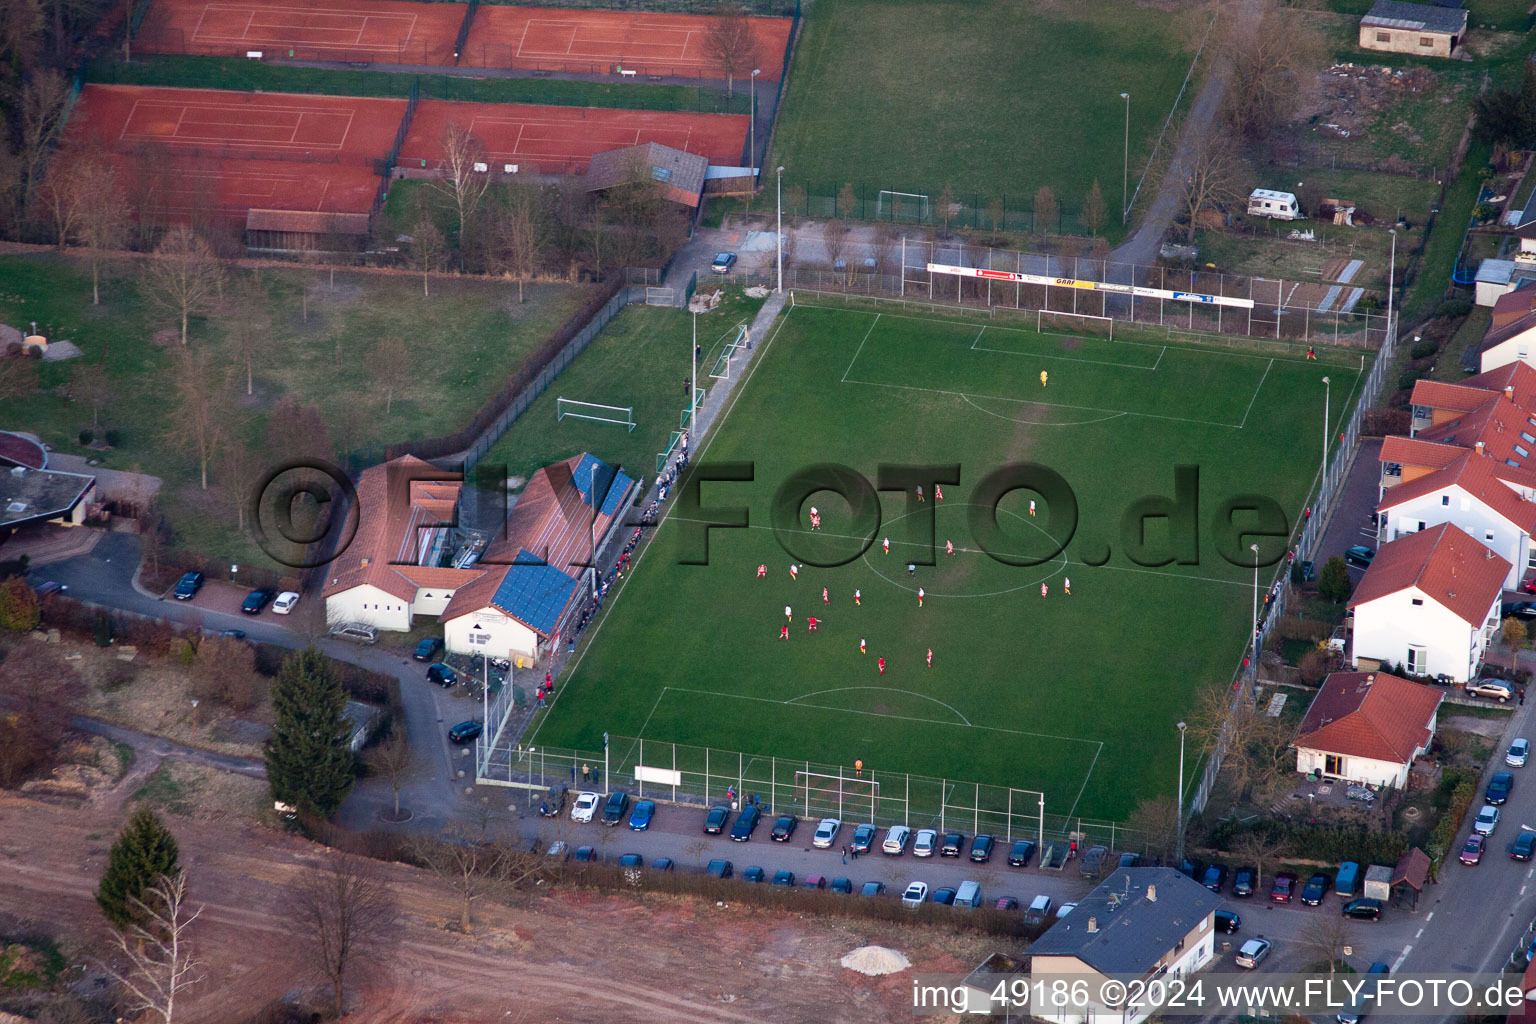 Bird's eye view of Sports fields in the district Ingenheim in Billigheim-Ingenheim in the state Rhineland-Palatinate, Germany